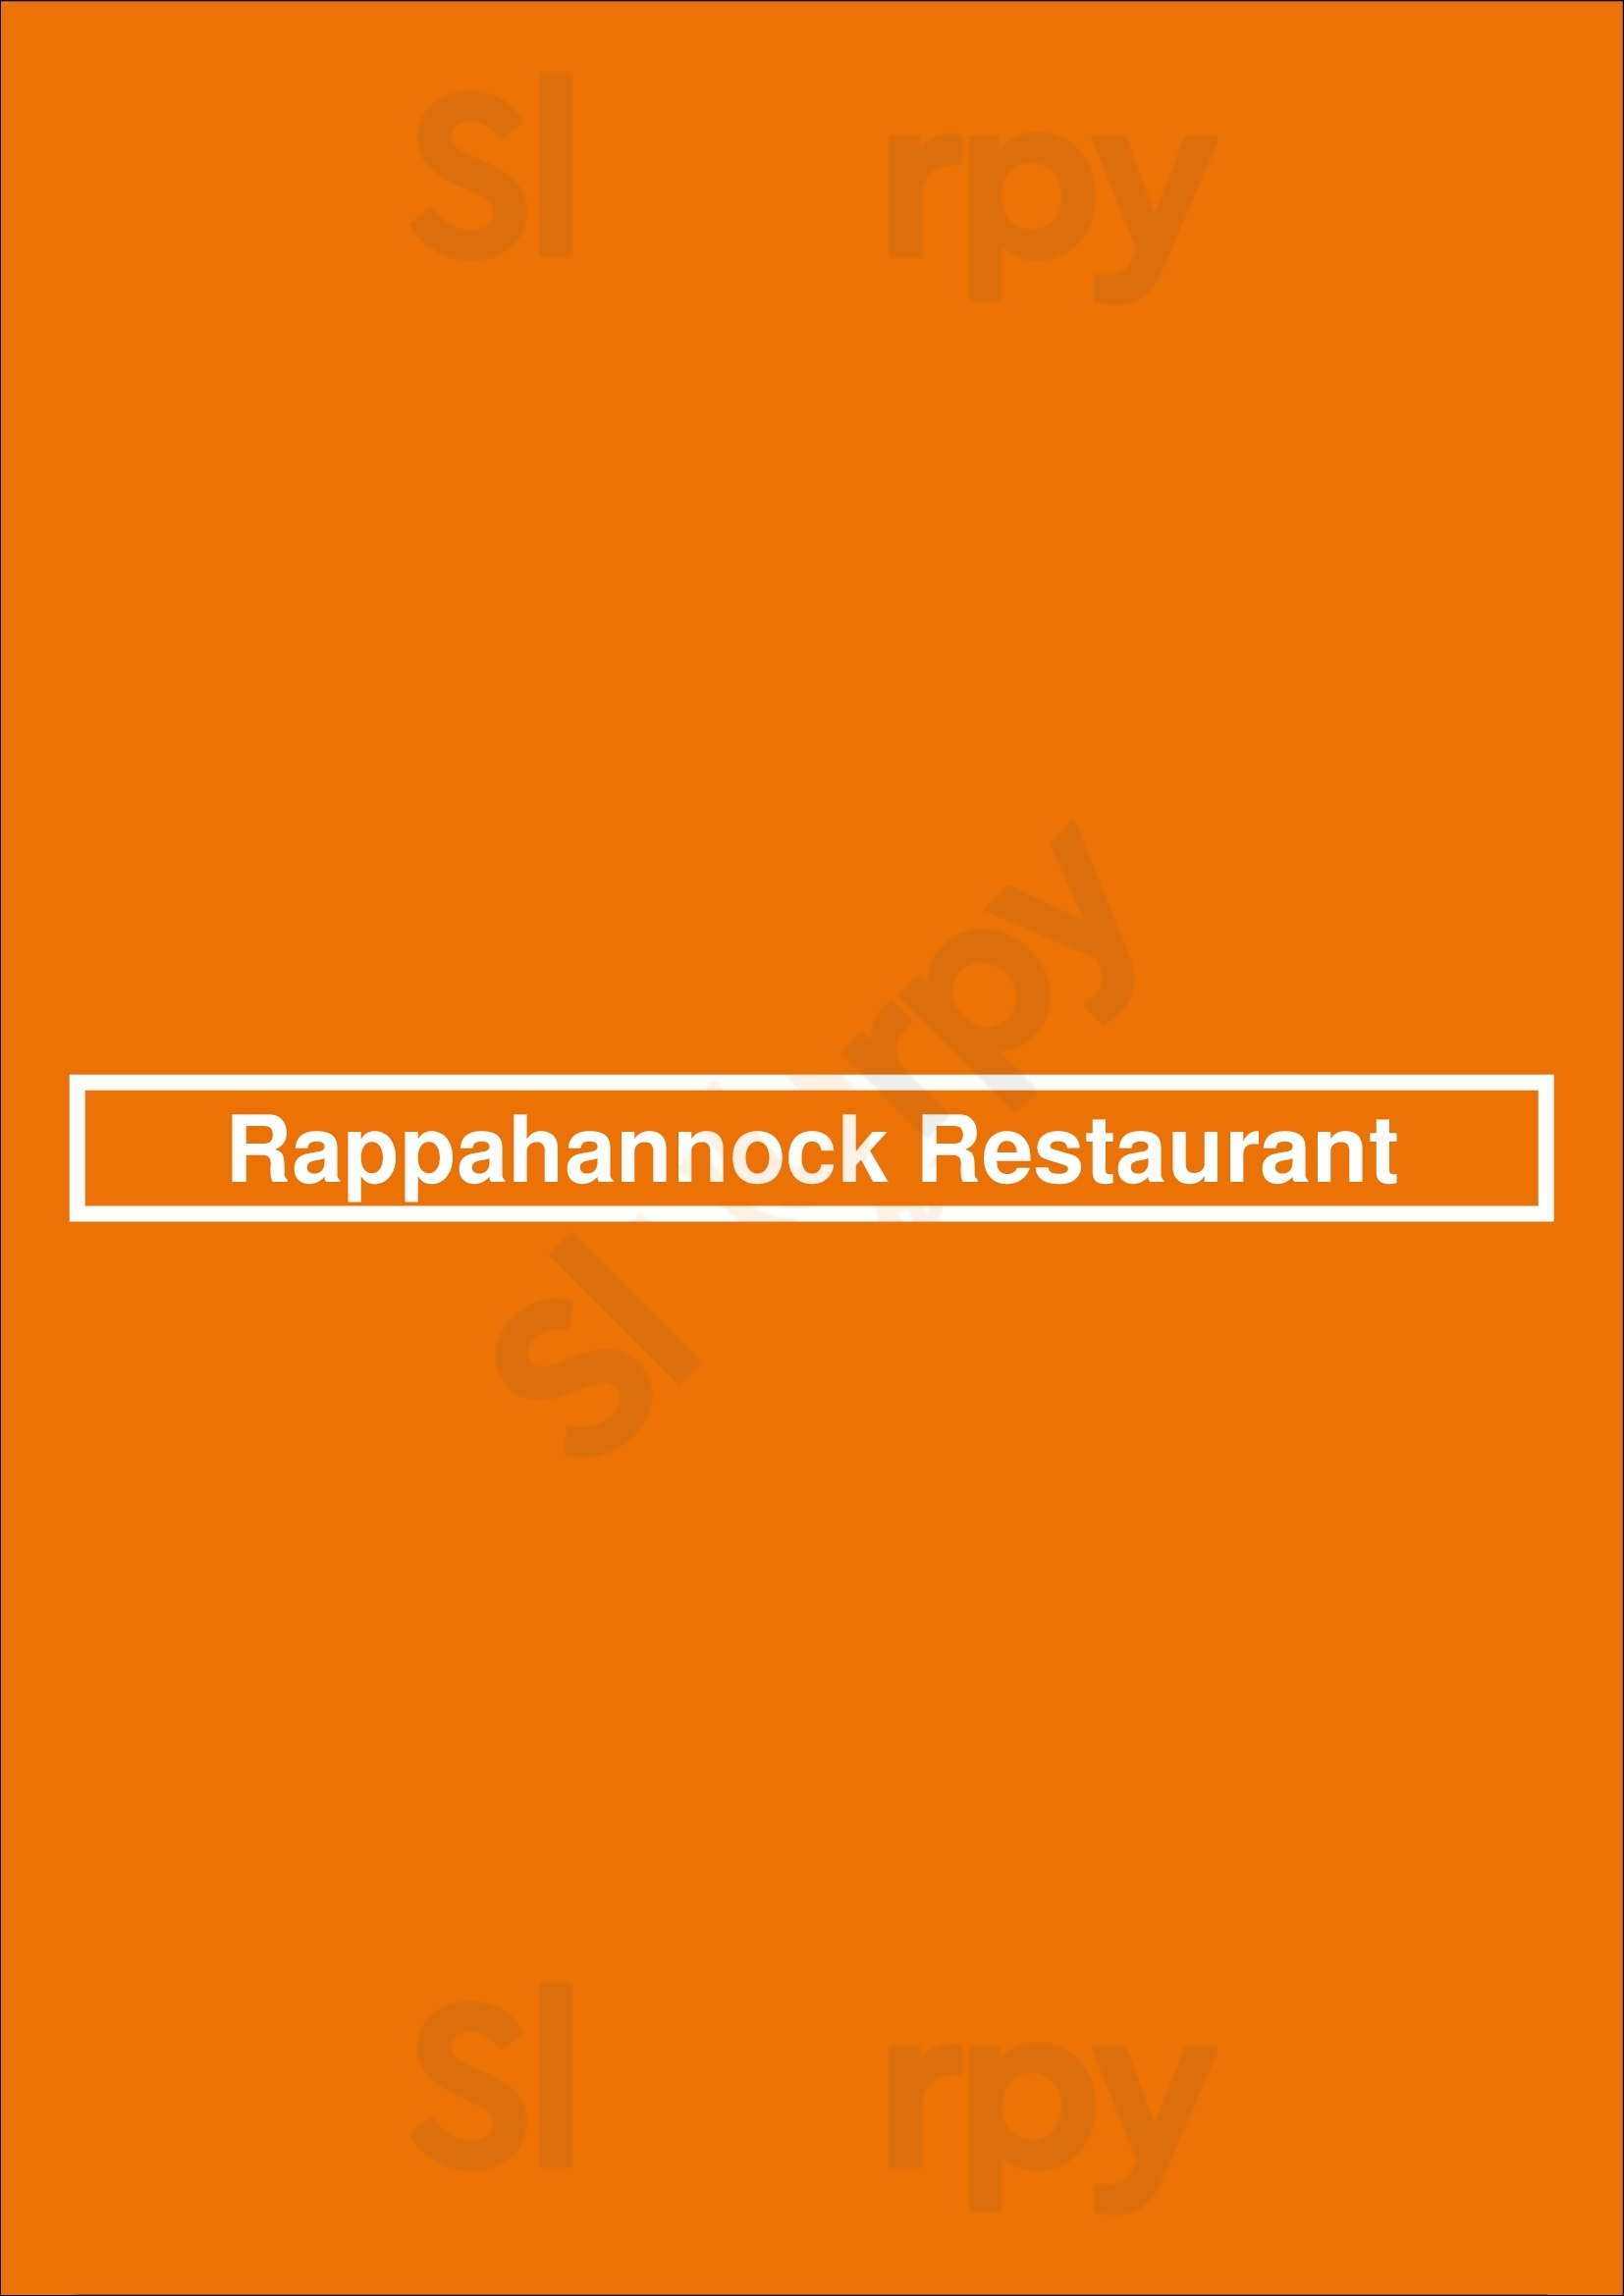 Rappahannock Restaurant Richmond Menu - 1